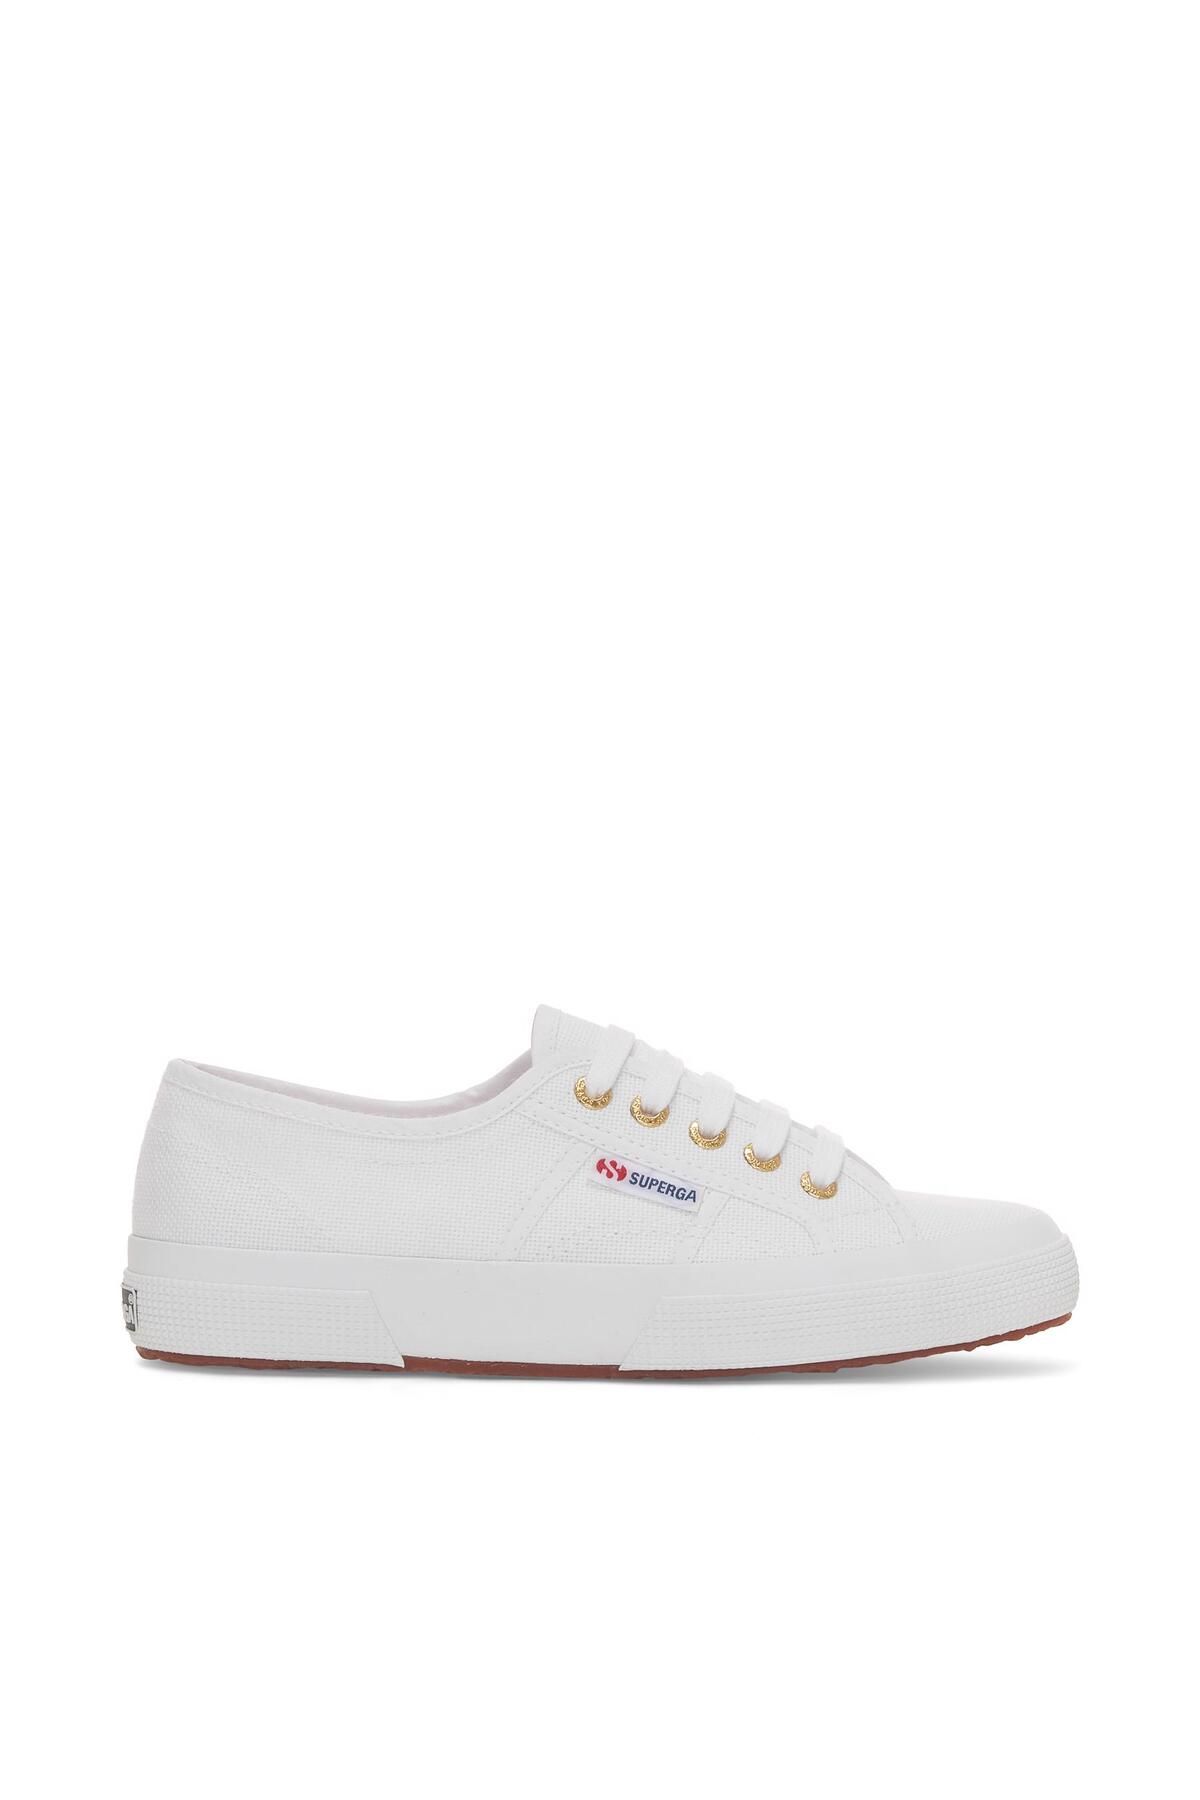 Superga 2750-cotu Classic Unisex Beyaz Bileksiz Sneaker